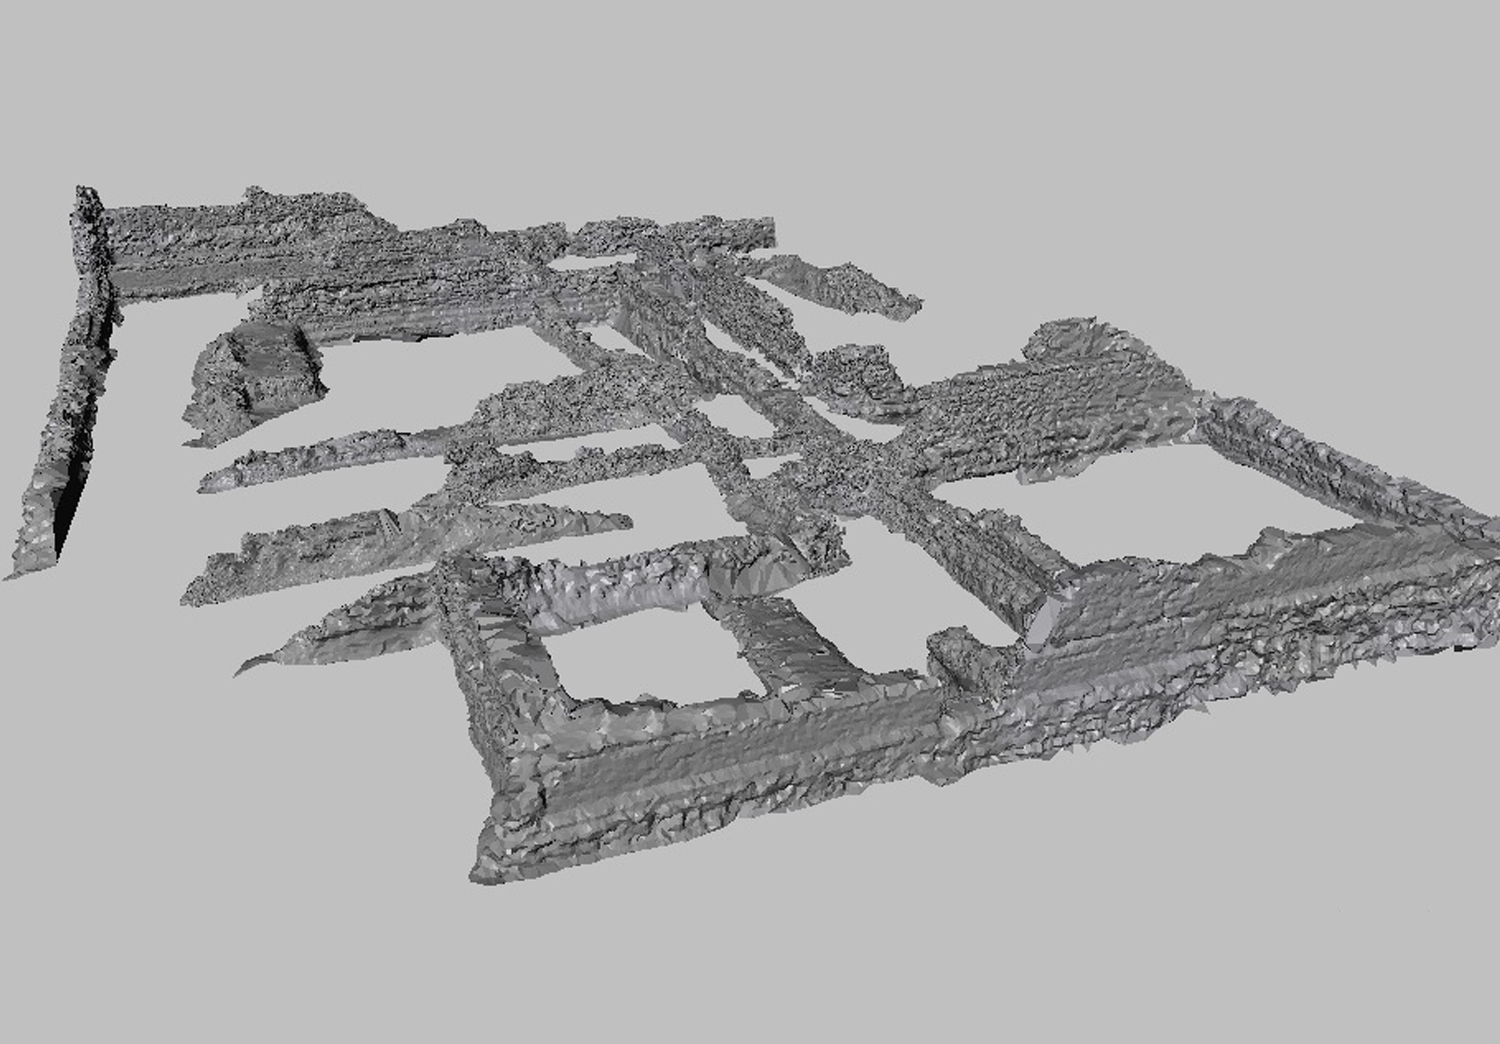 3D model arheoloških izkopavanj - NUK